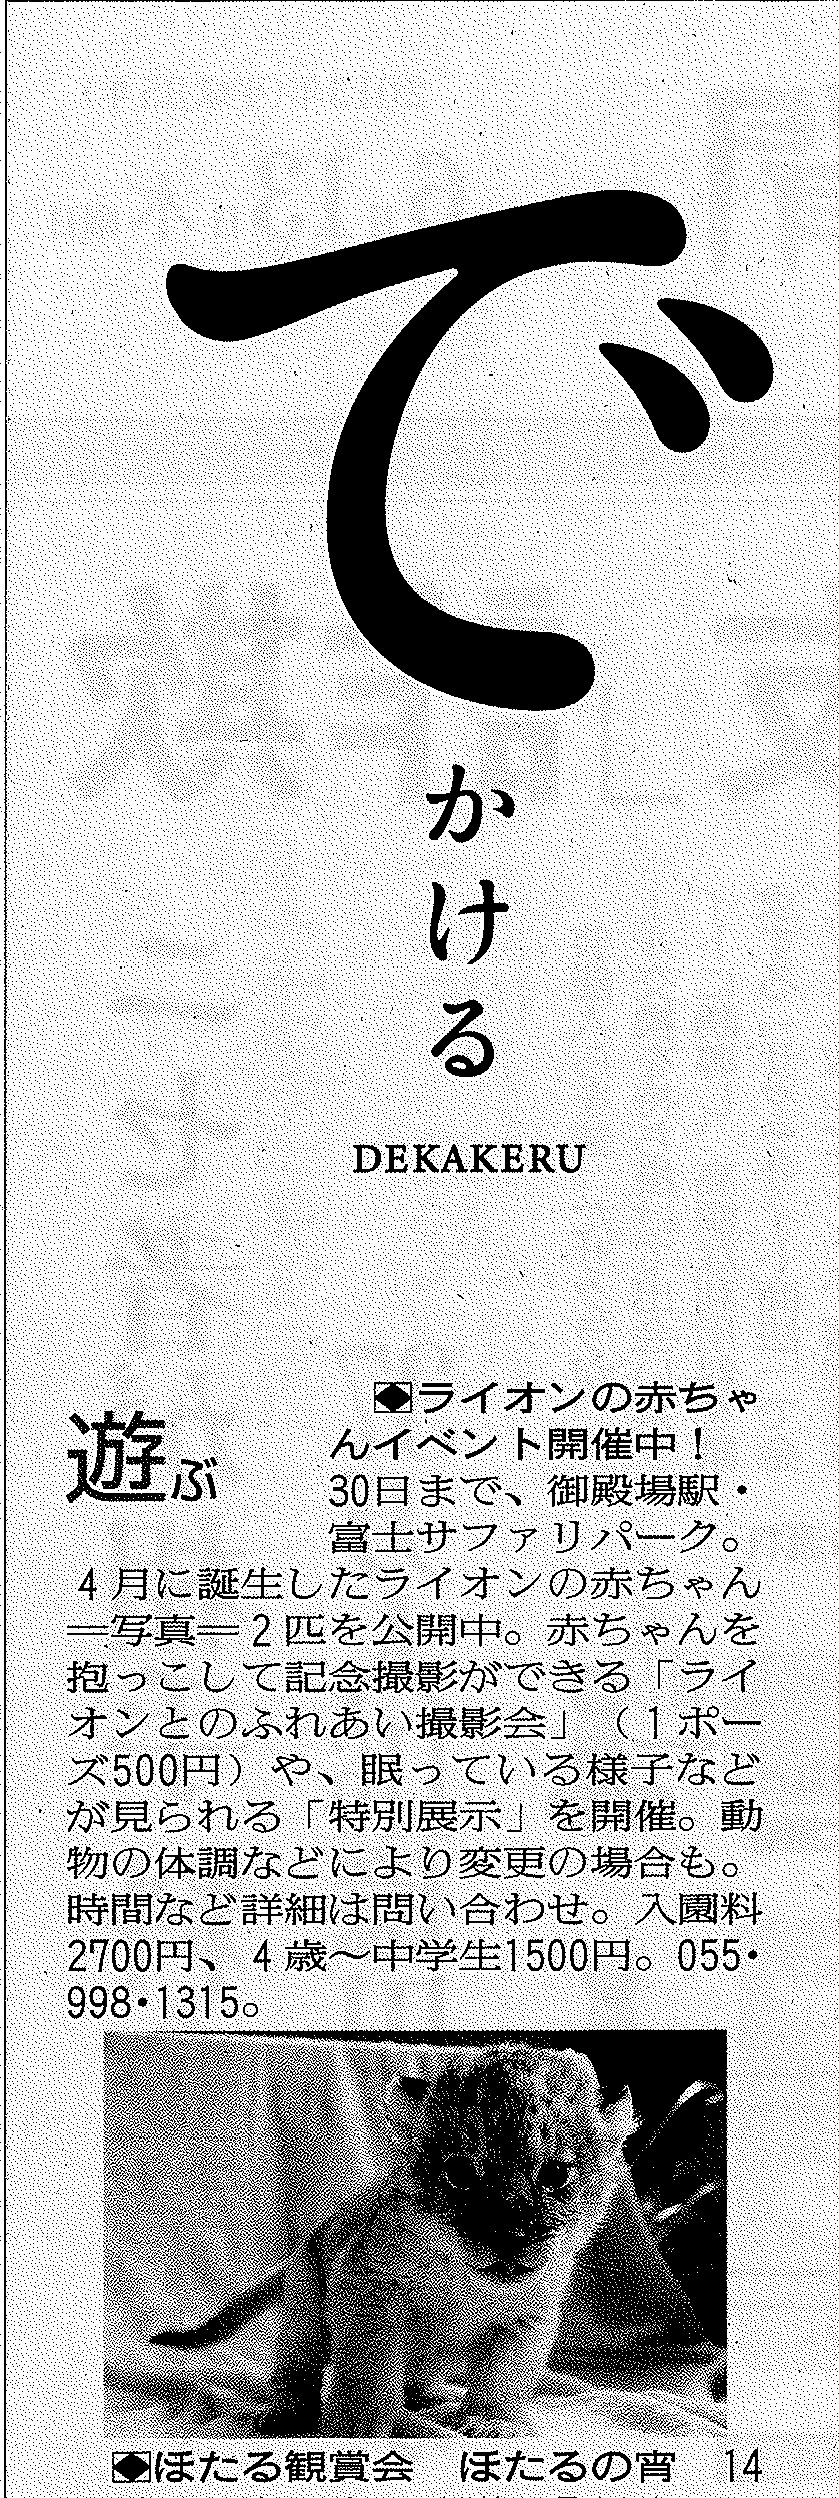 C-TCY-DekakeruHeadline-1-JapaneseNewspaper-2013.jpg
